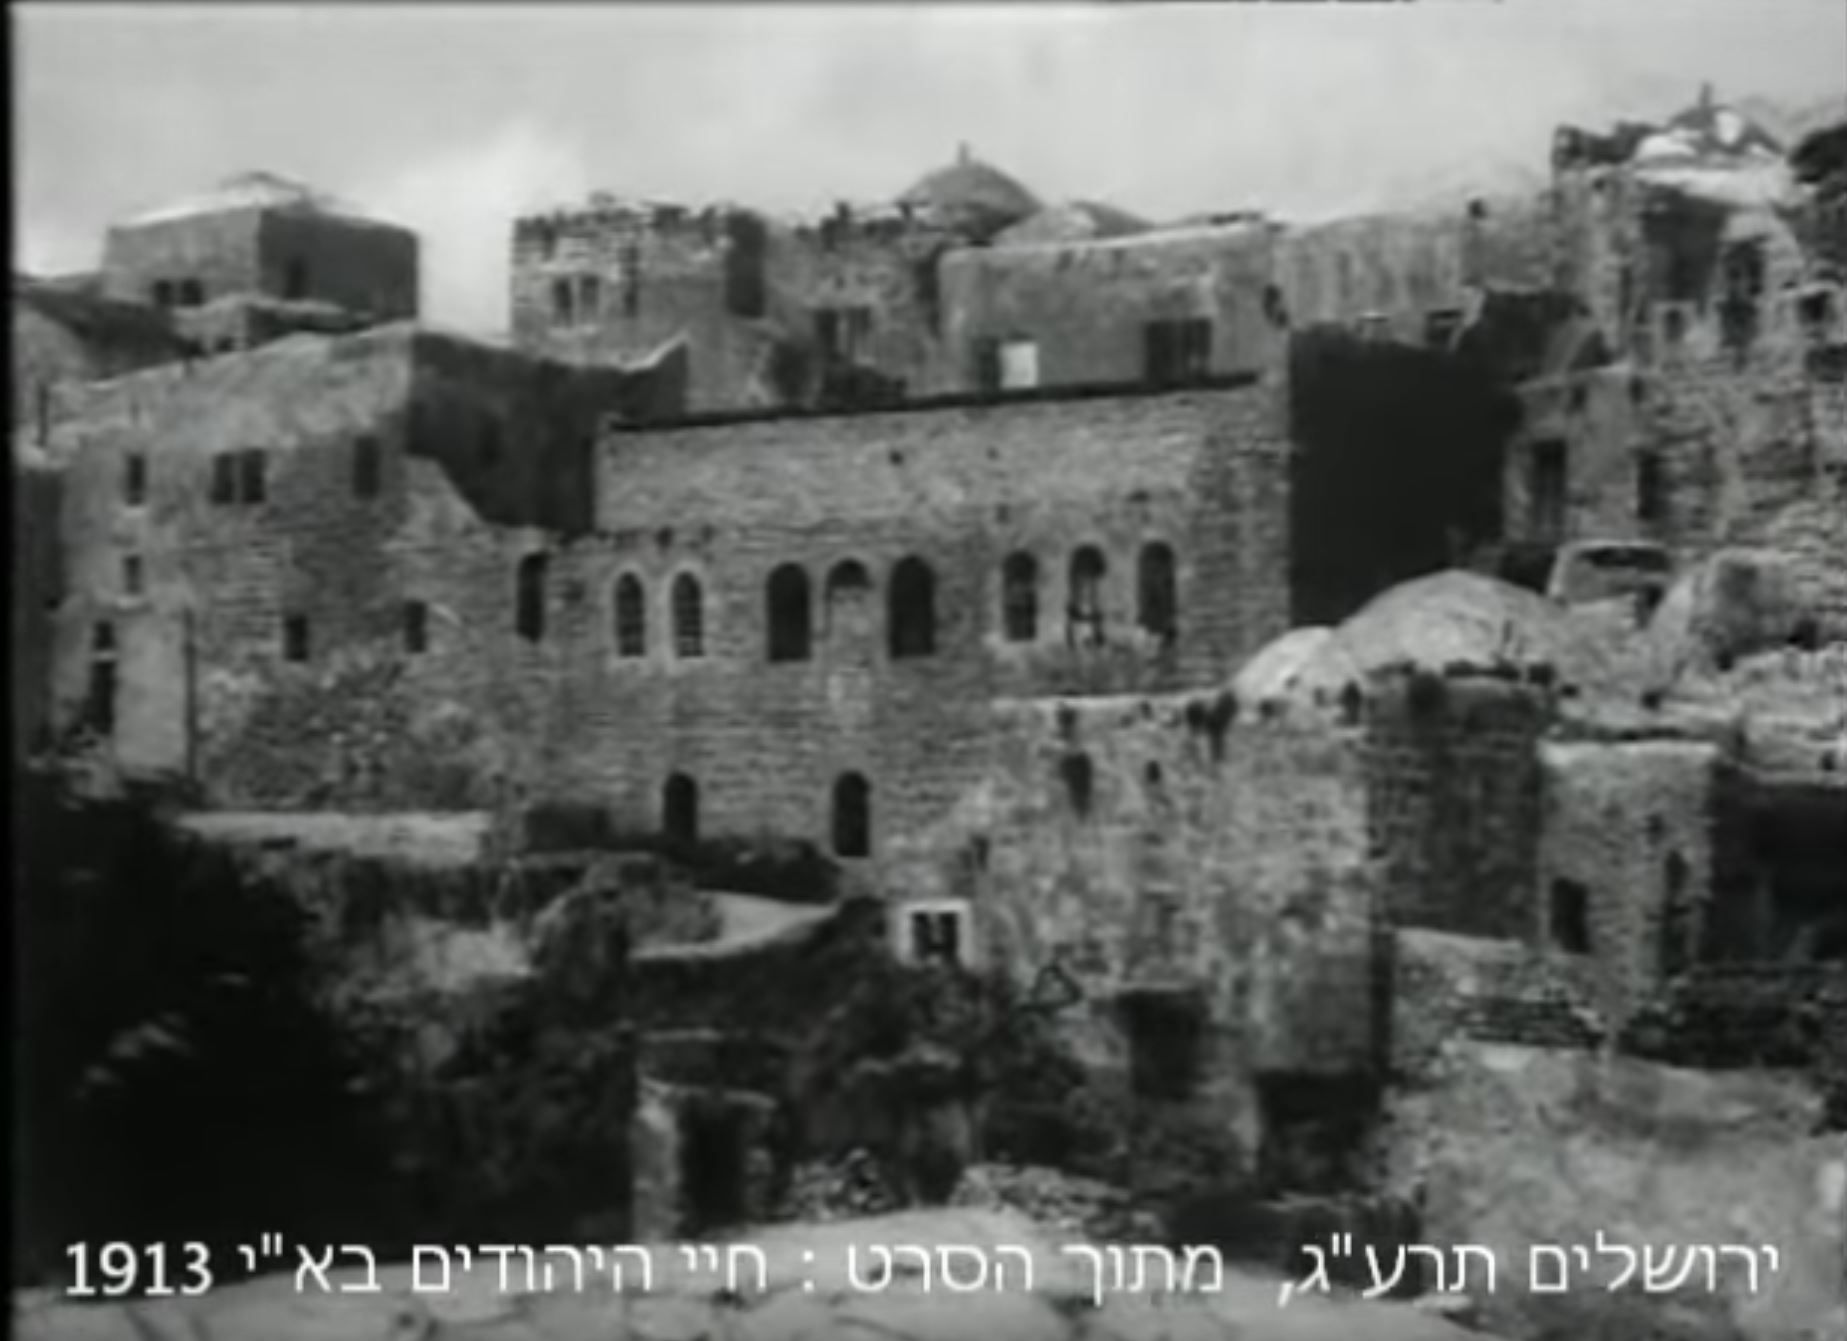 Video Footage of Jerusalem in 1913